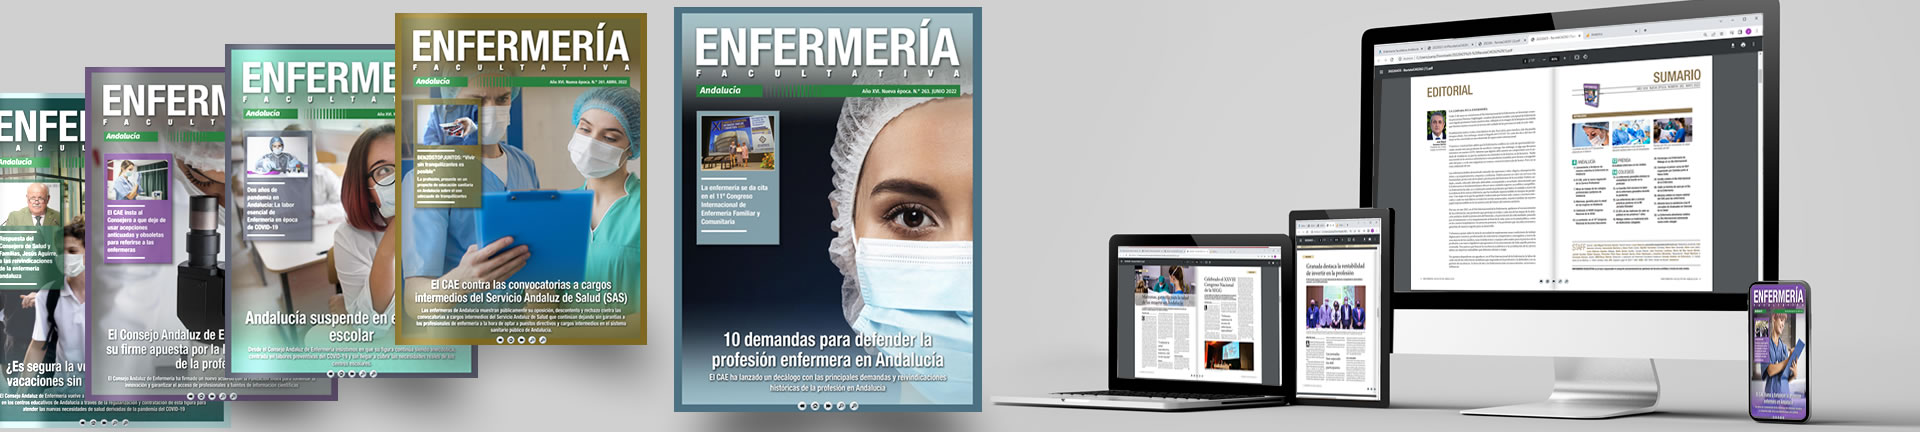 Consejo Andaluz de Colegios de Enfermería - CAE - Revista Enfermería Facultativa número 263 - Edición Andalucía